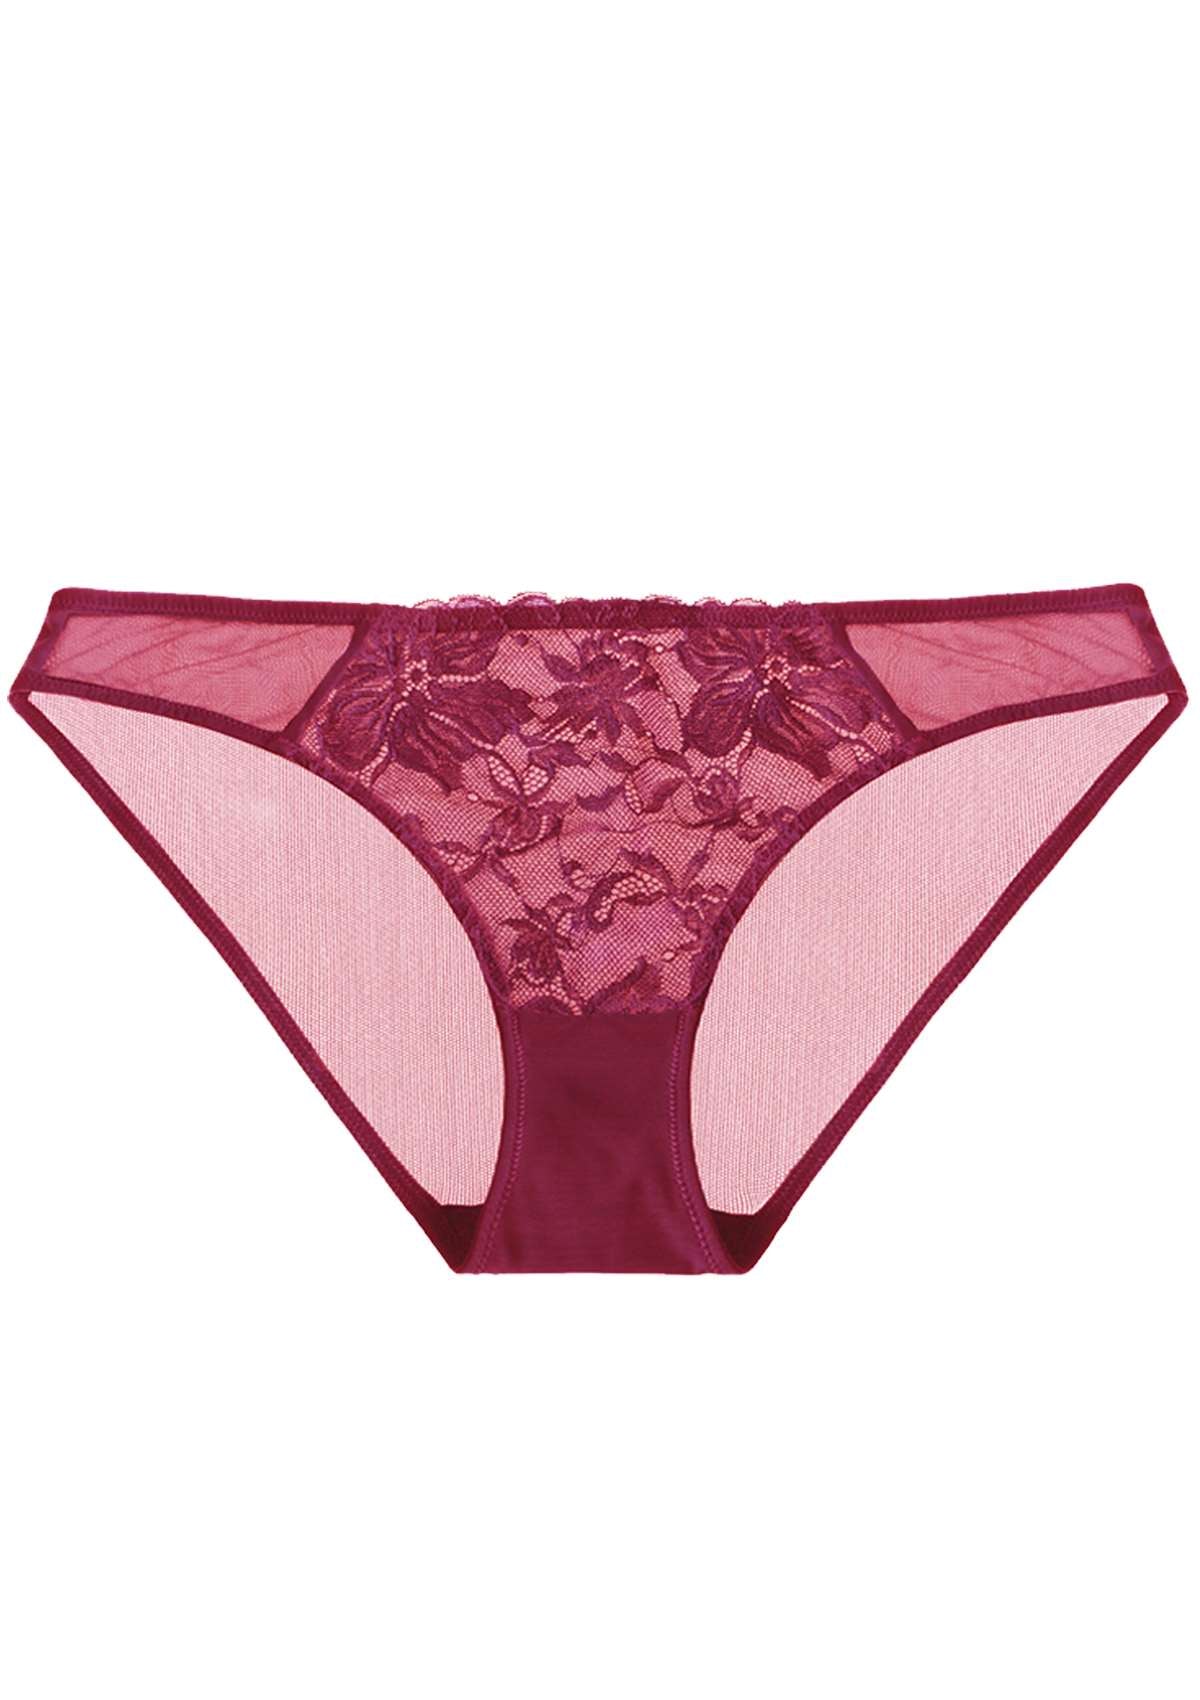 HSIA Breathable Sexy Feminine Lace Mesh Bikini Underwear - XL / Red